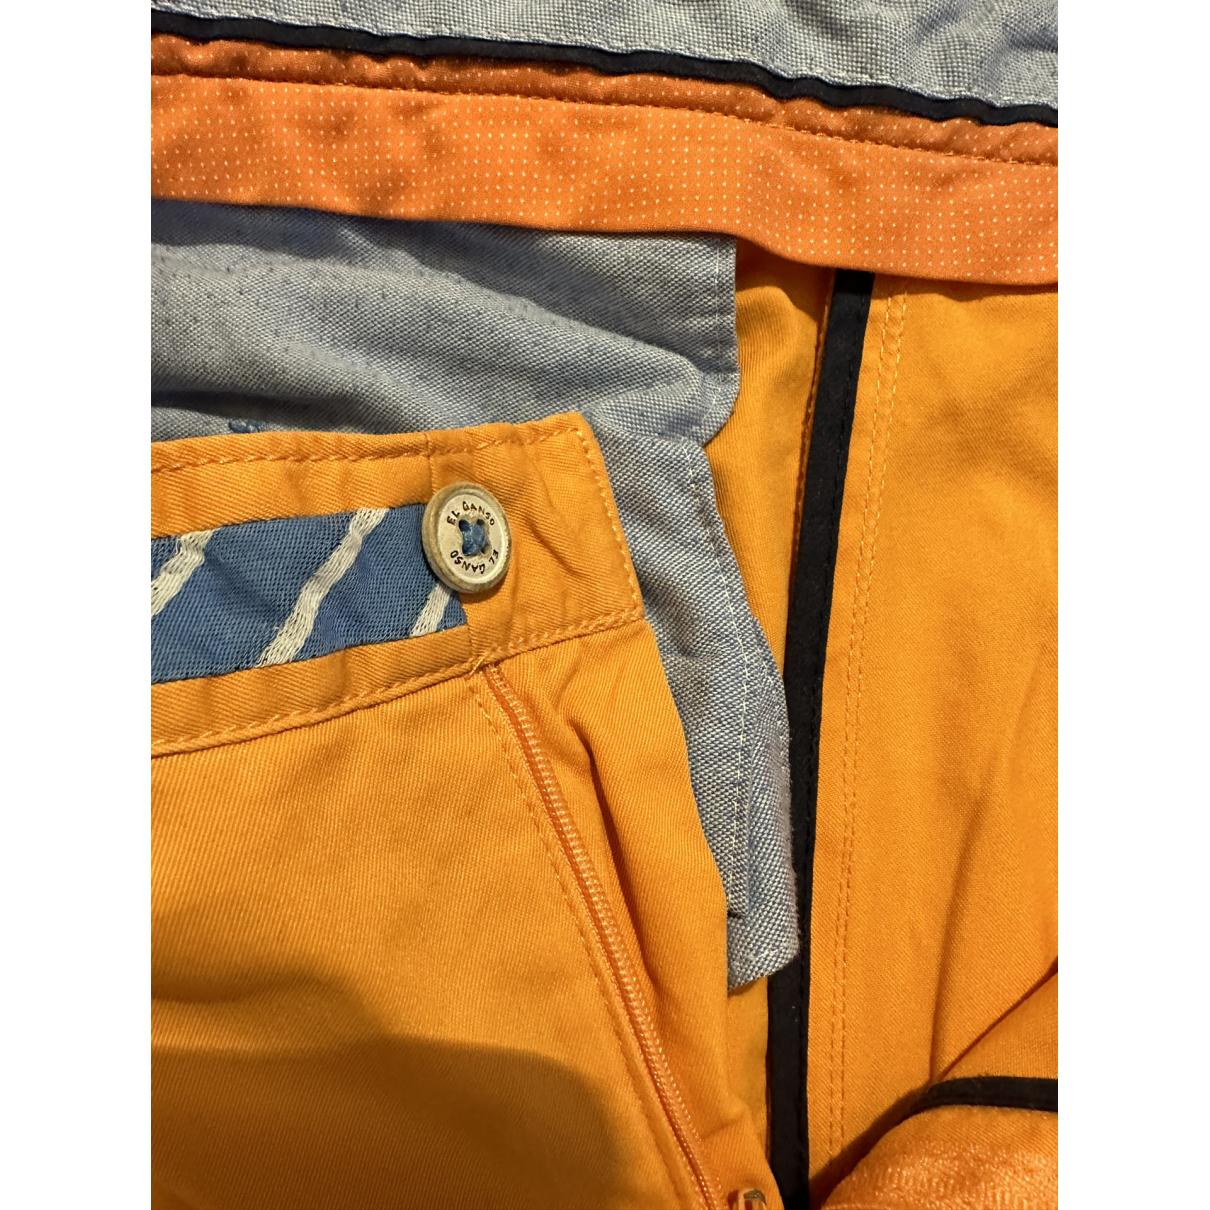 Pantalon EL GANSO Orange taille M International en Coton - 30202419